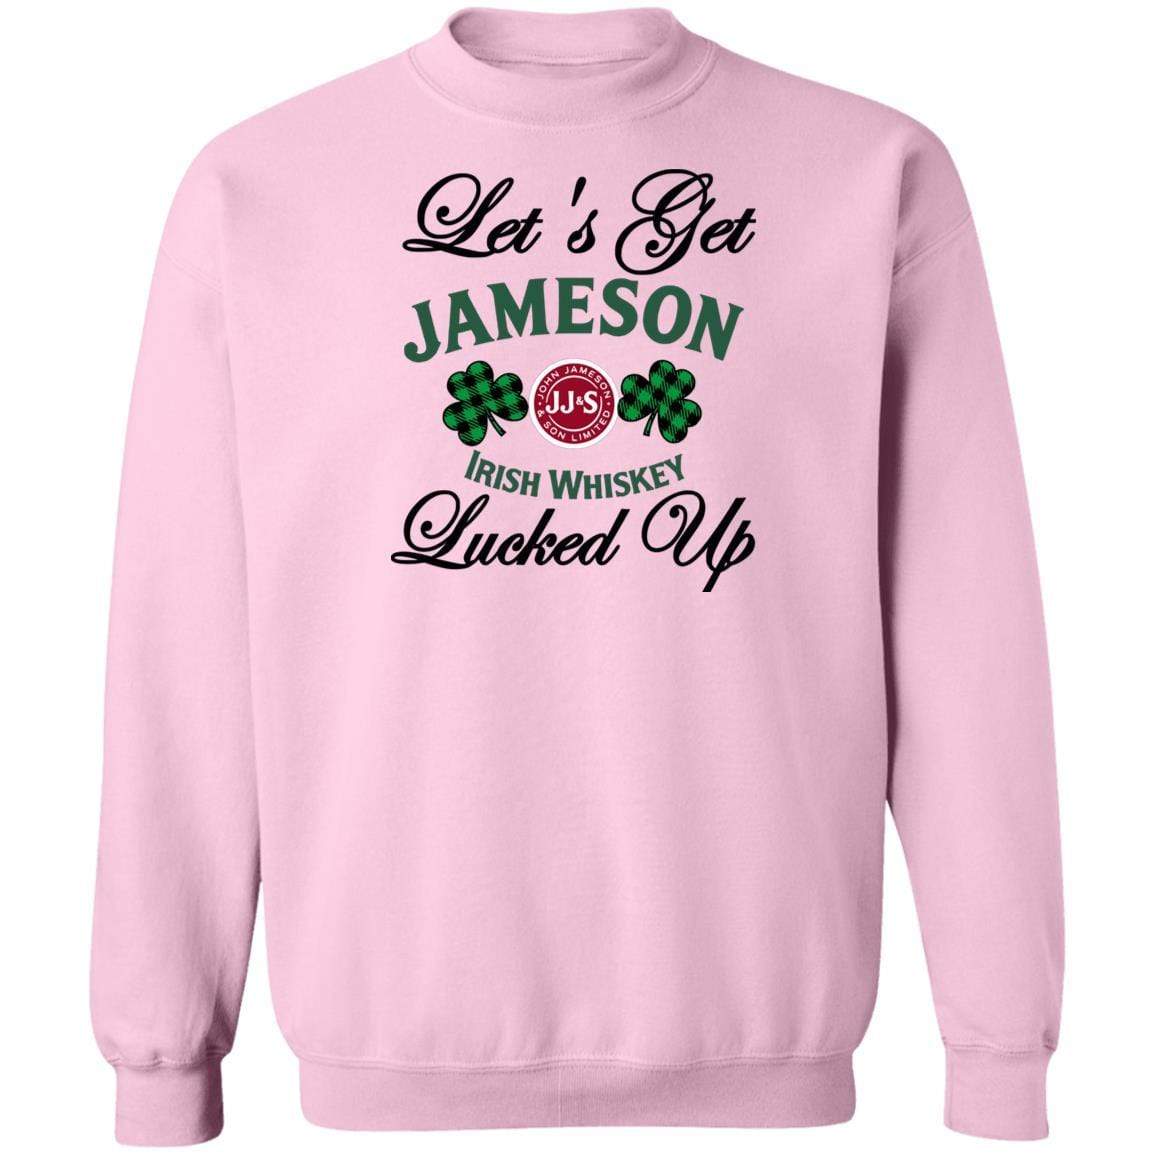 Sweatshirts Light Pink / S Winey Bitches Co "Let's Get Lucked Up" Jameson Crewneck Pullover Sweatshirt  8 oz. WineyBitchesCo